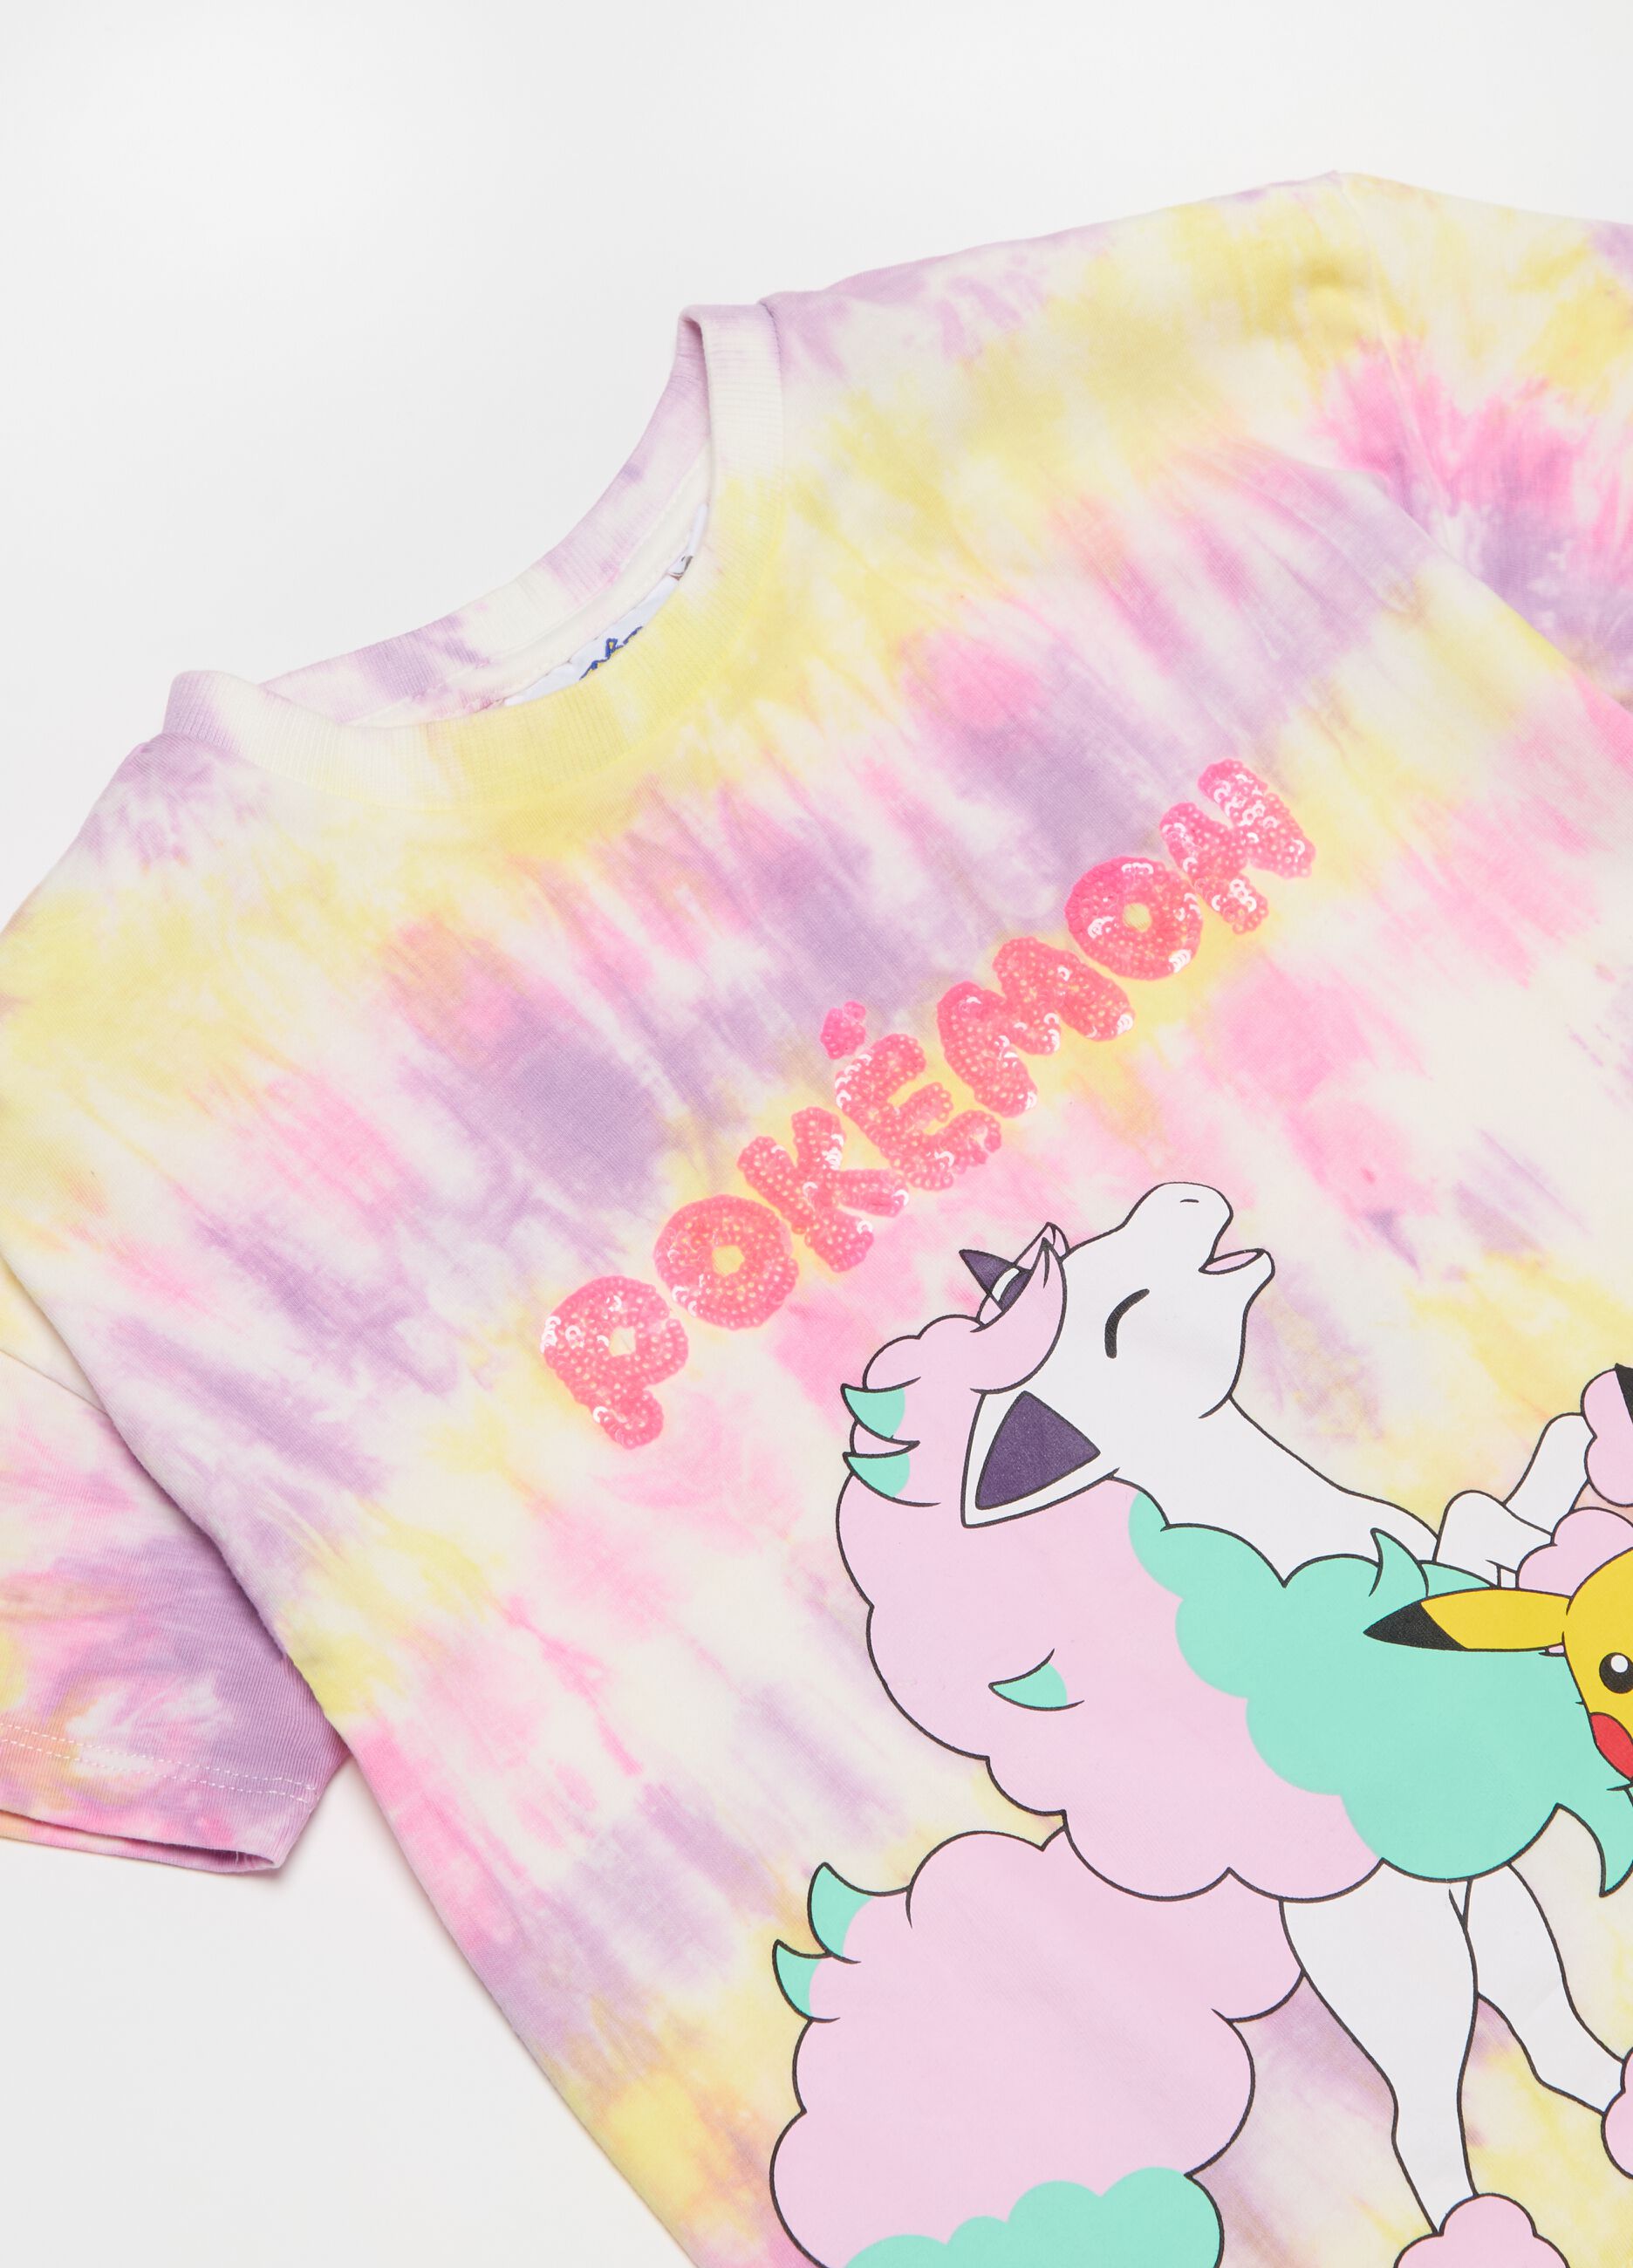 Tie-dye T-shirt with Pikachu print